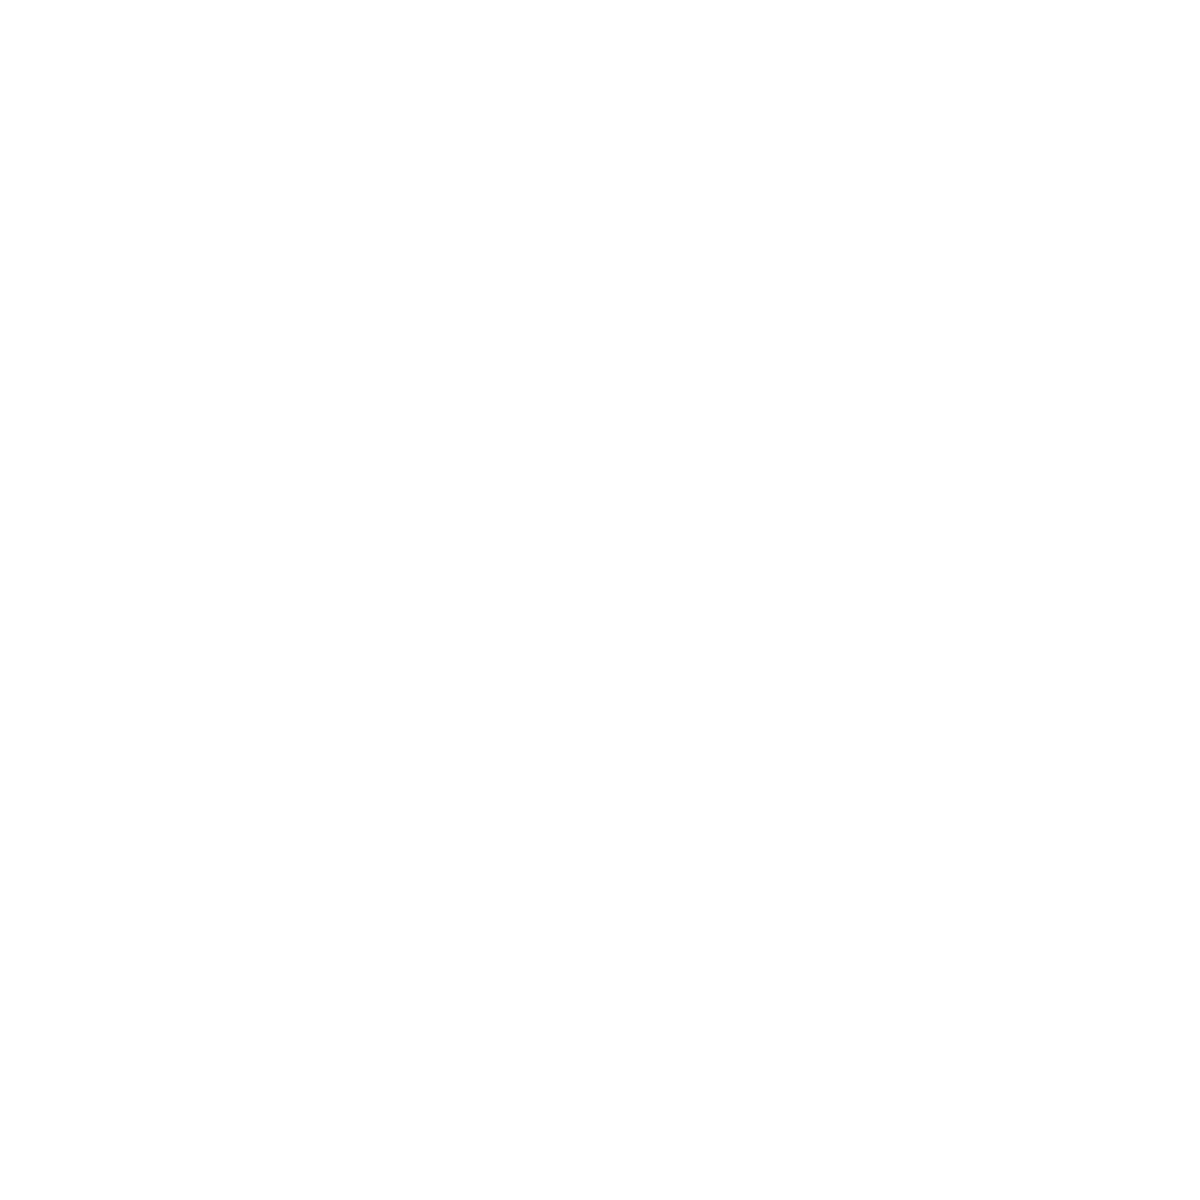 SCENE Logos Final_Secondary Logo-08 copy